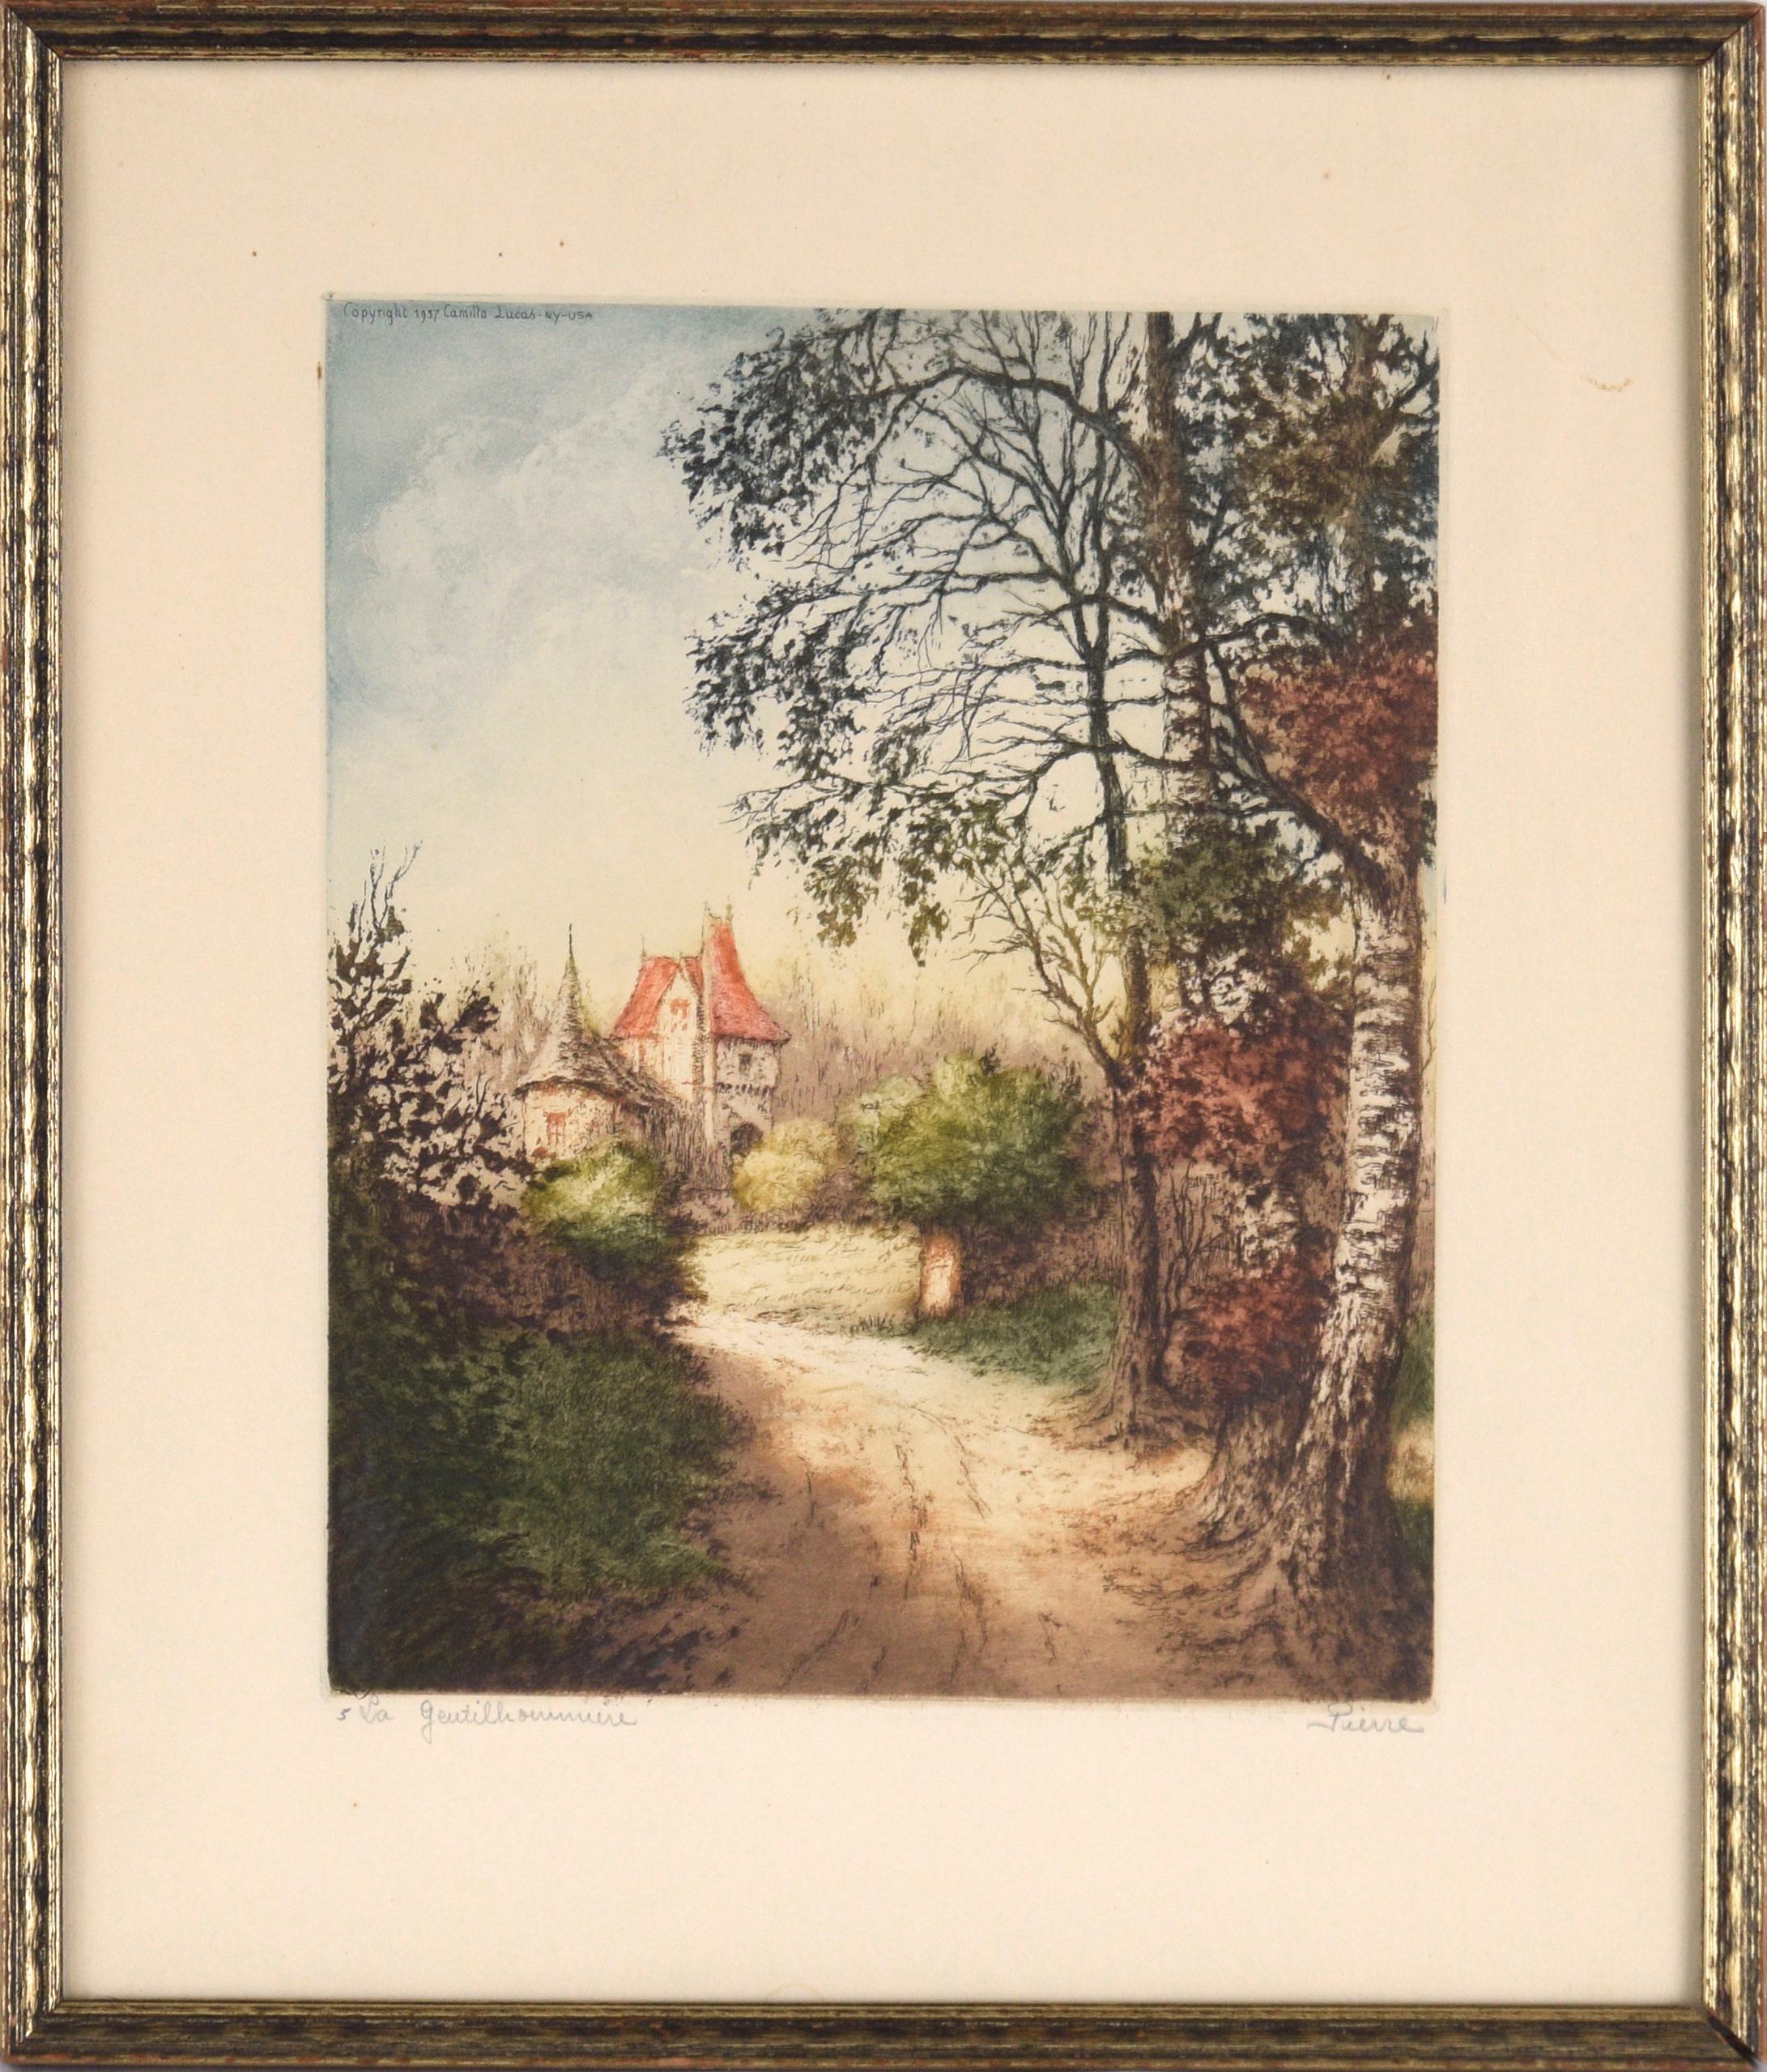 Unknown Landscape Print - "The Country Home" (La Gentilhommiere) - Original Etching